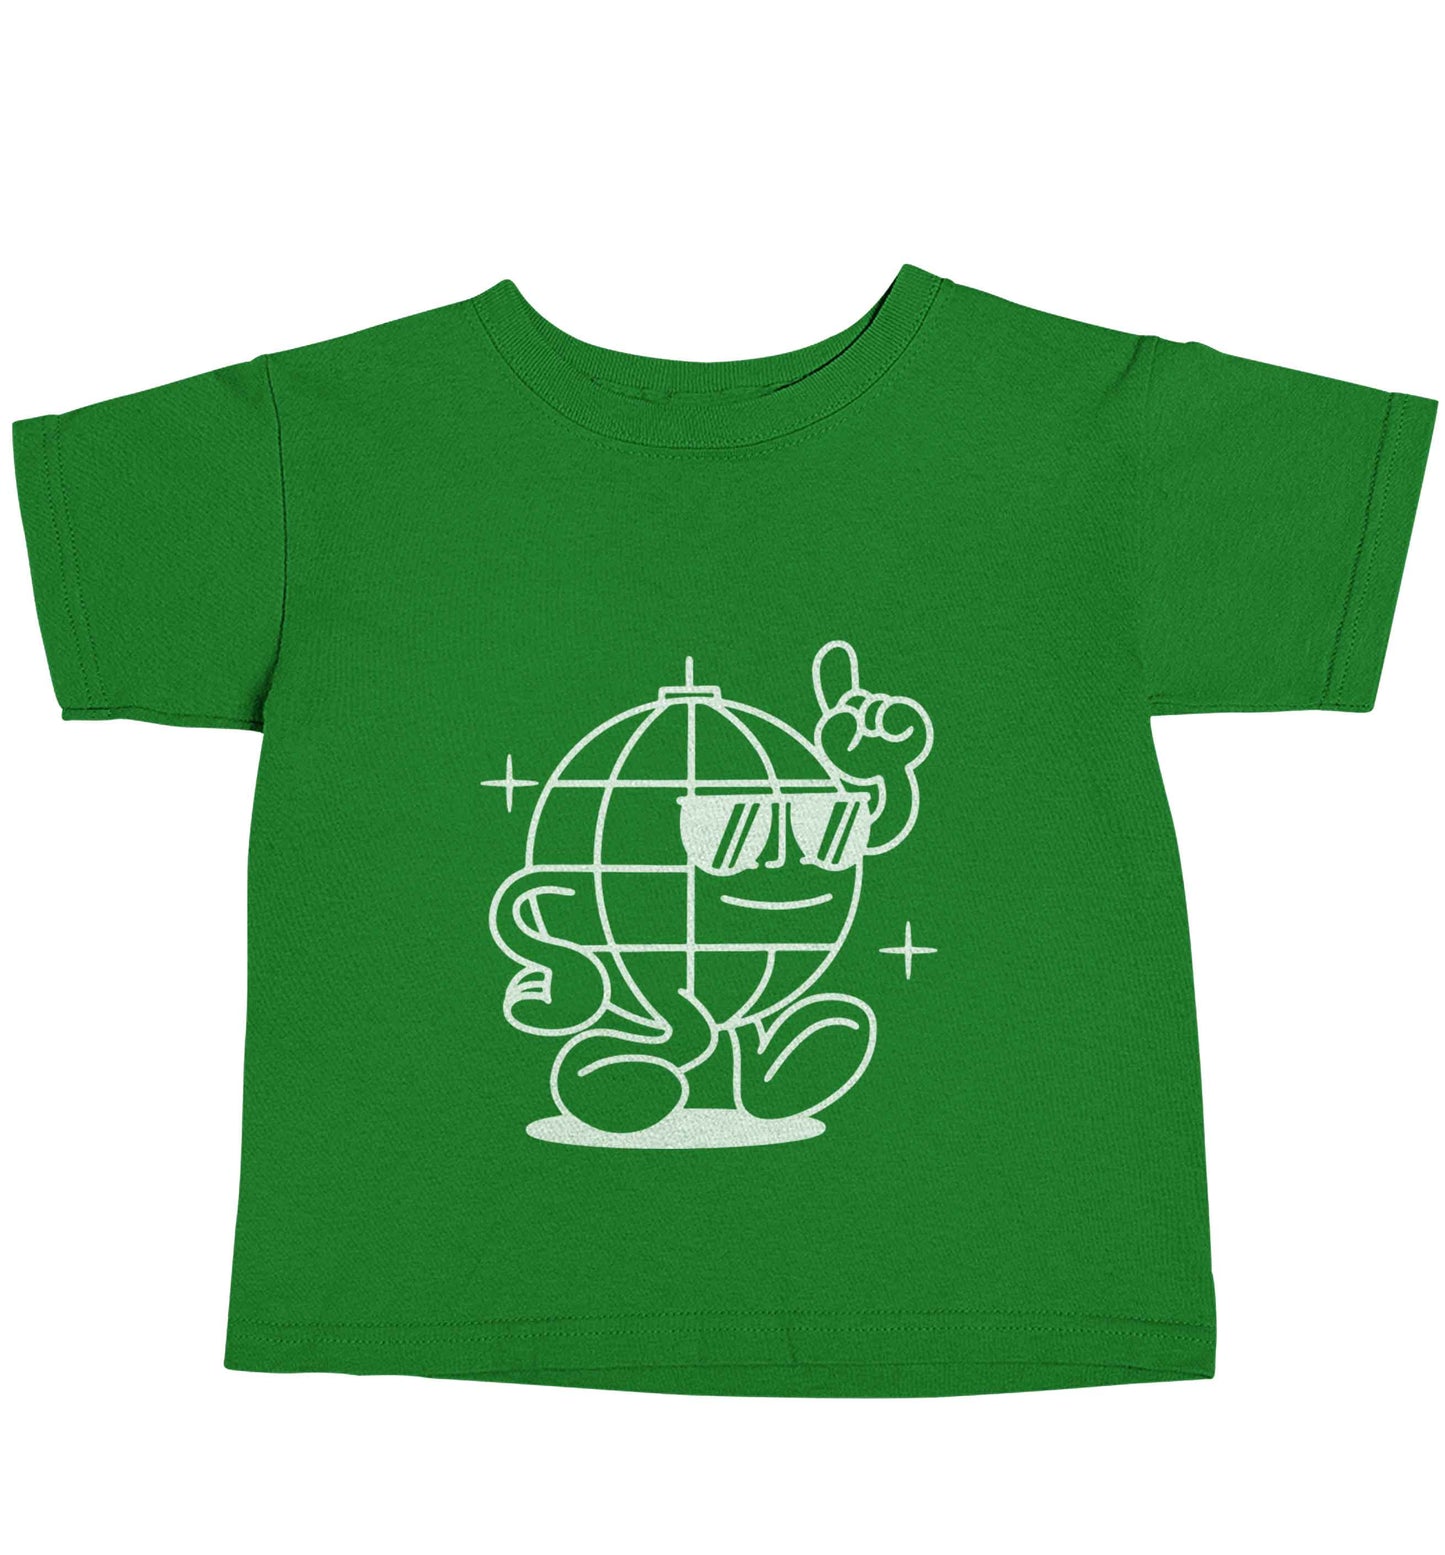 Disco ball green baby toddler Tshirt 2 Years